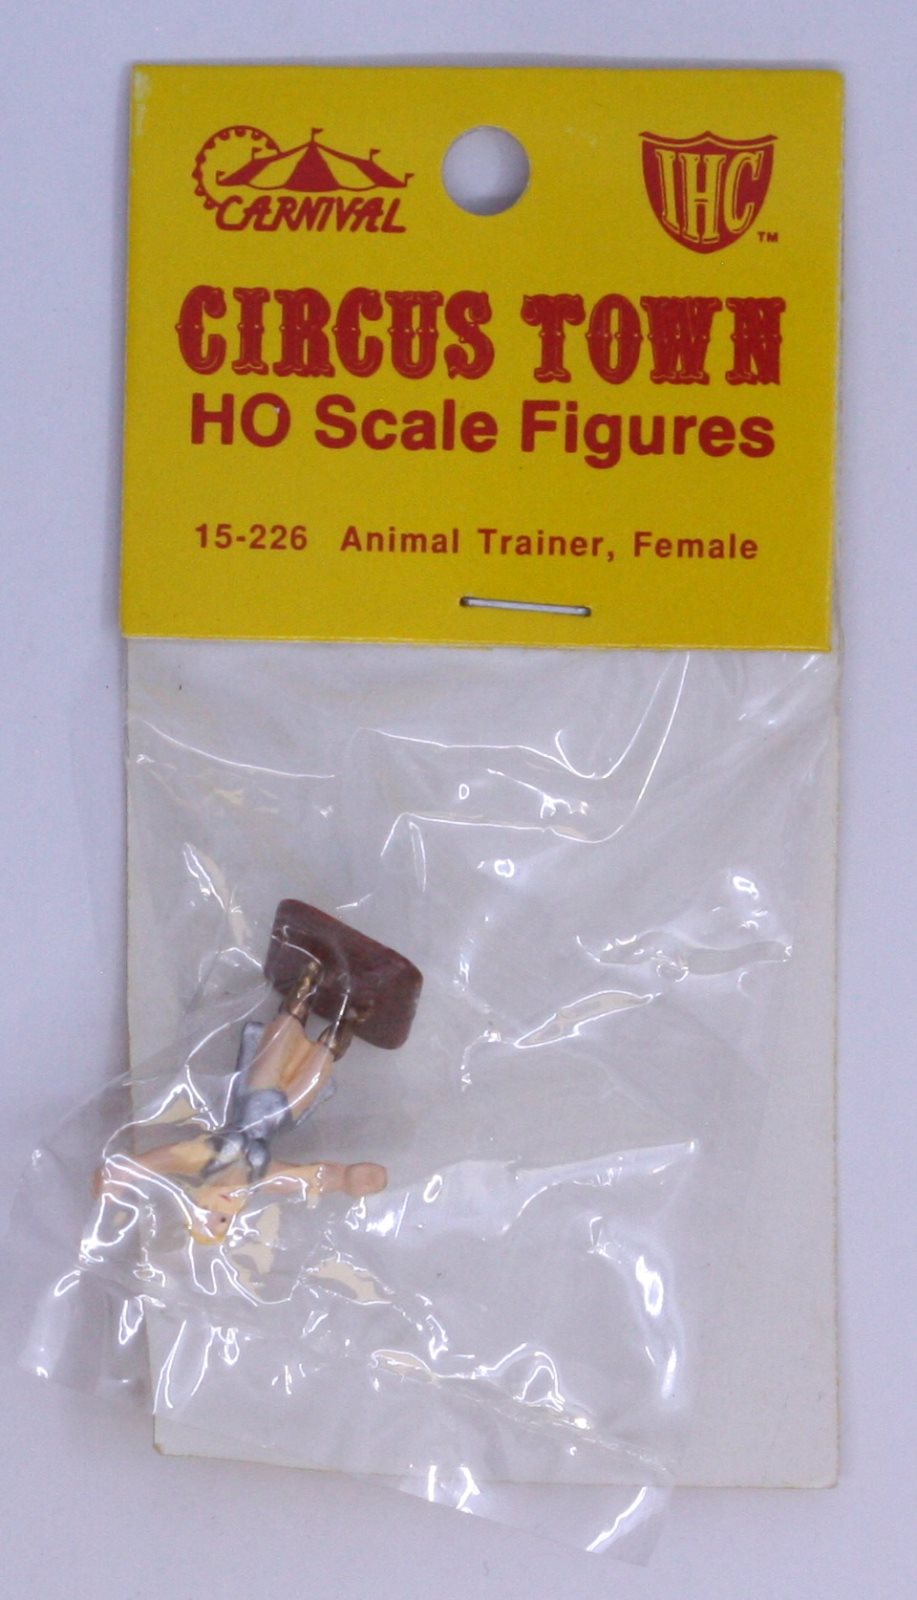 IHC 15-226 HO Circus Town Female Animal Trainer